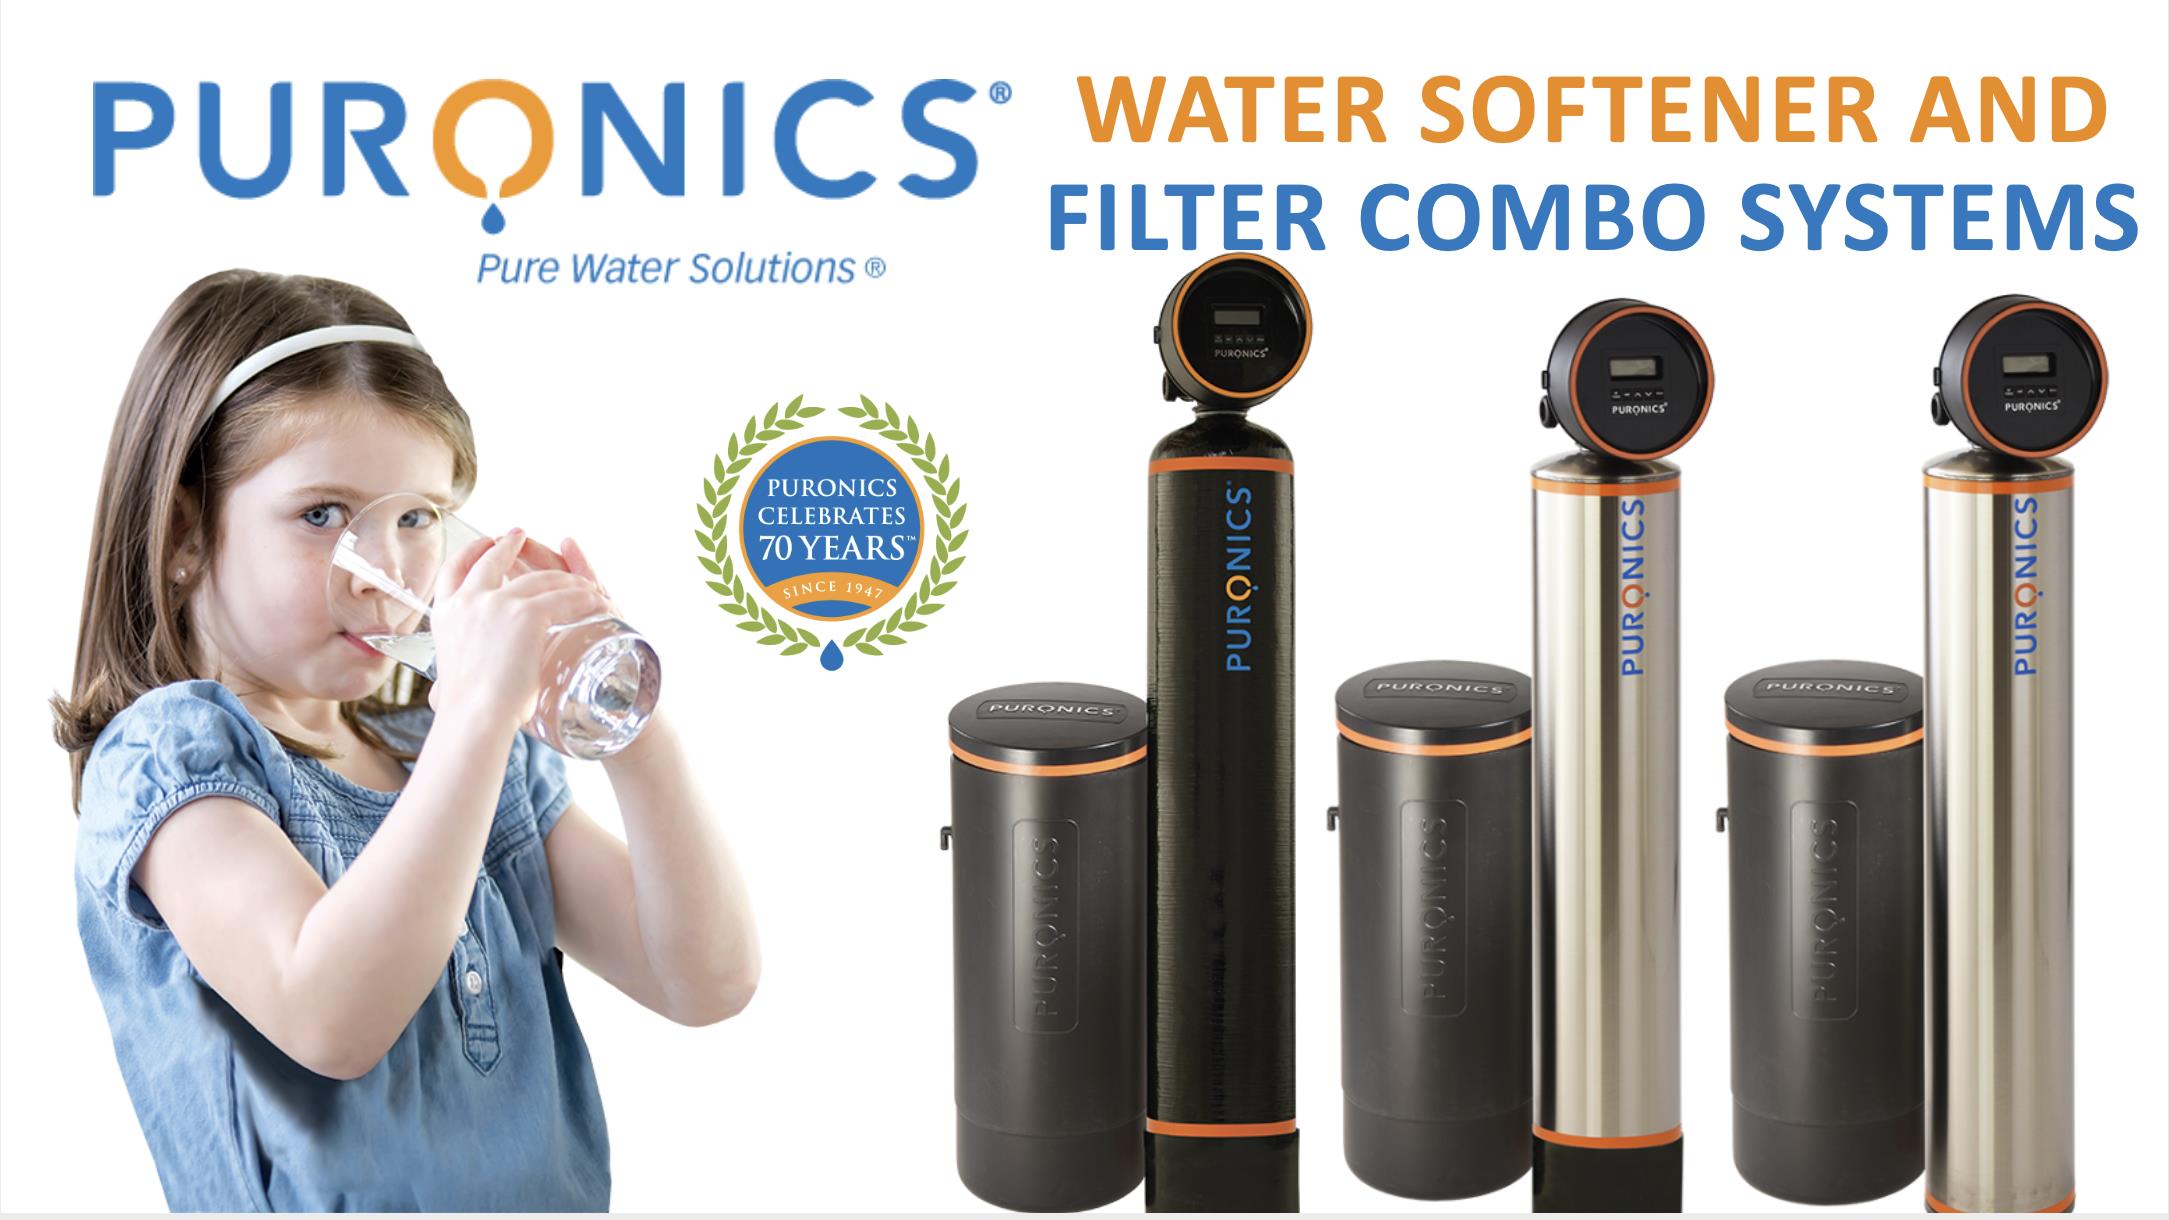 Pierce Water Solutions